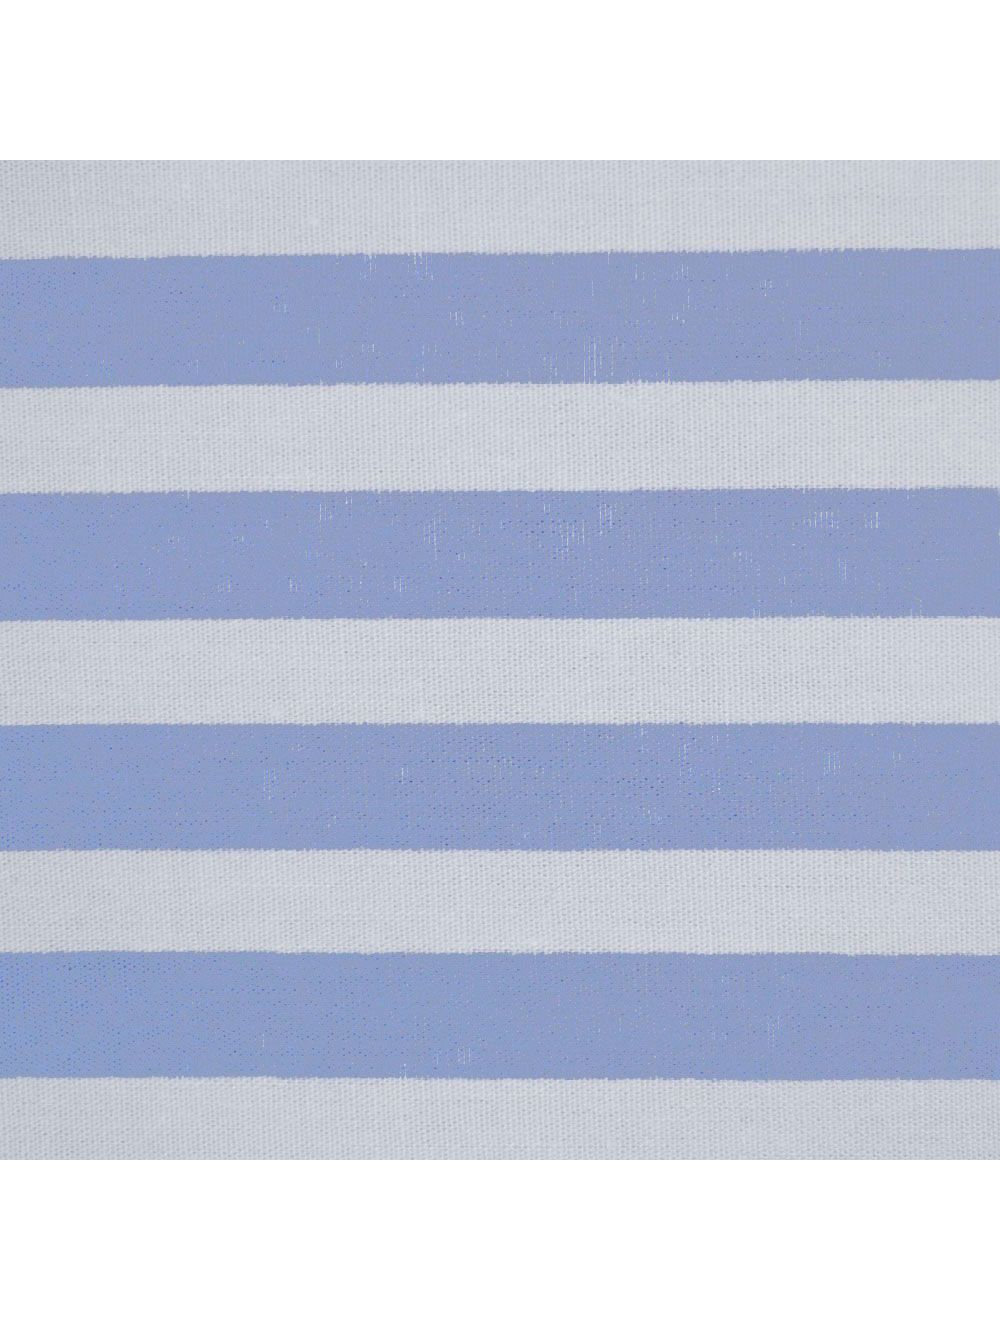 Dyeing & Batik Fabric Cotton fabric stripes white-blue 5,40 meters etna ...